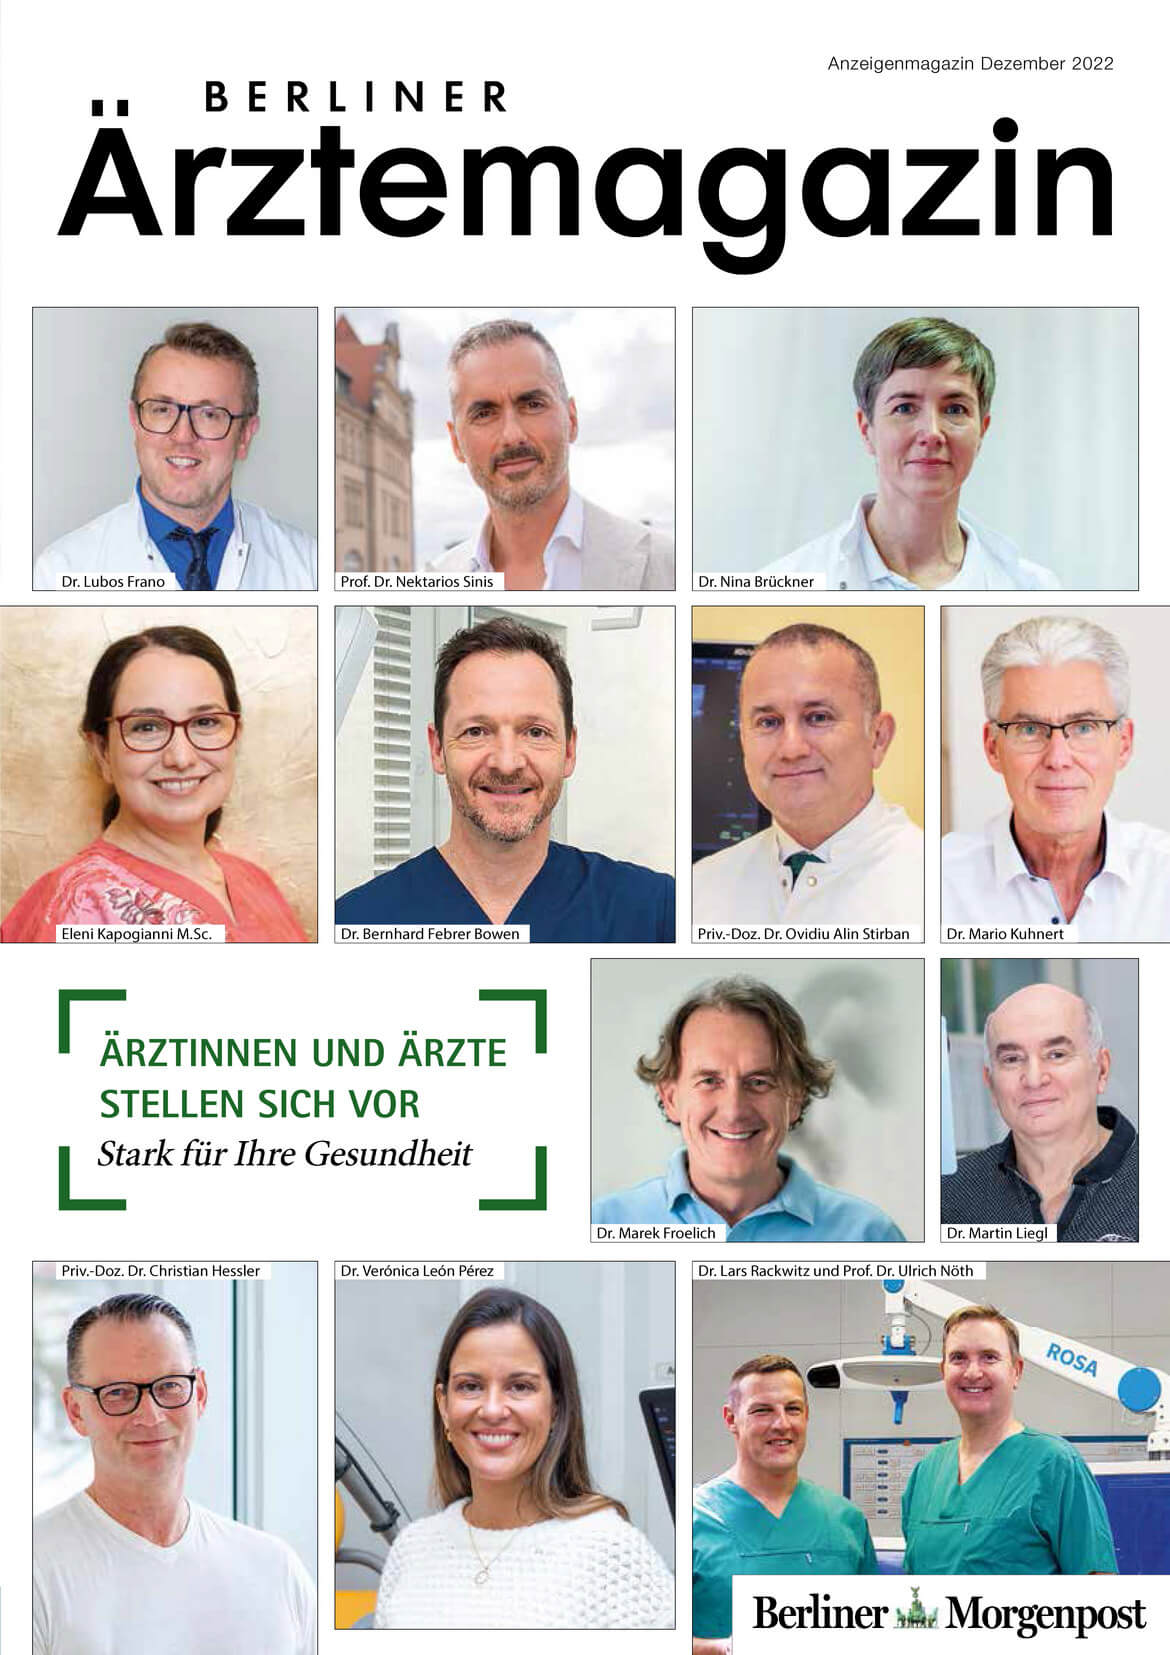 Berliner Ärztemagazin Ausgabe Dezember 2022 erschienen